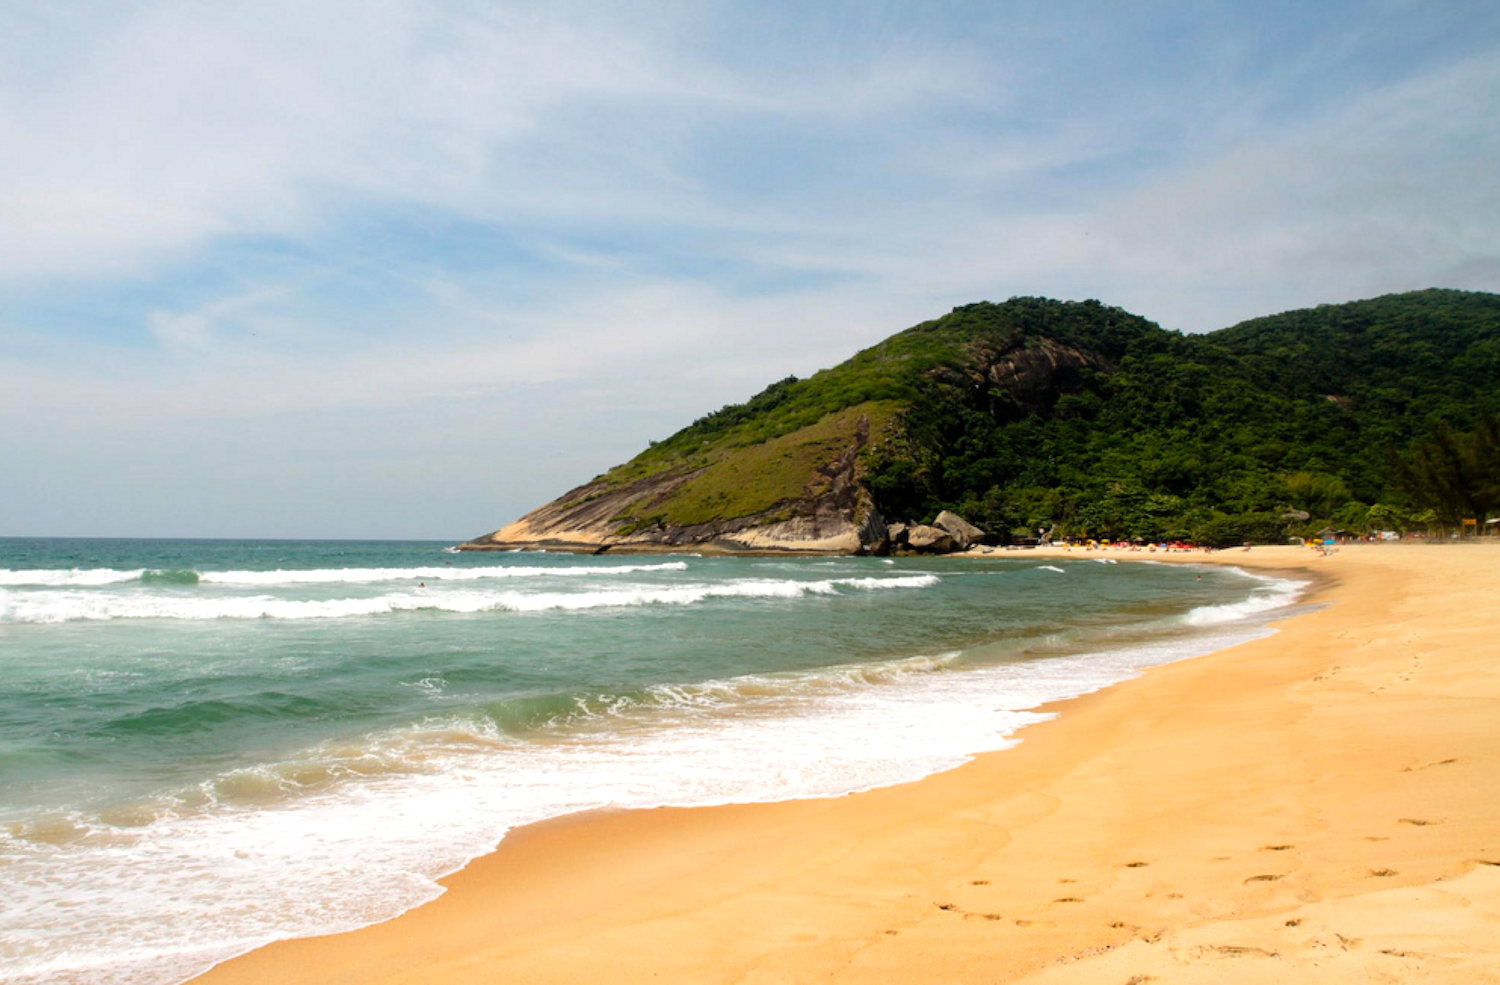 First Nude Beach Legalized in Grumari, Rio de Janeiro